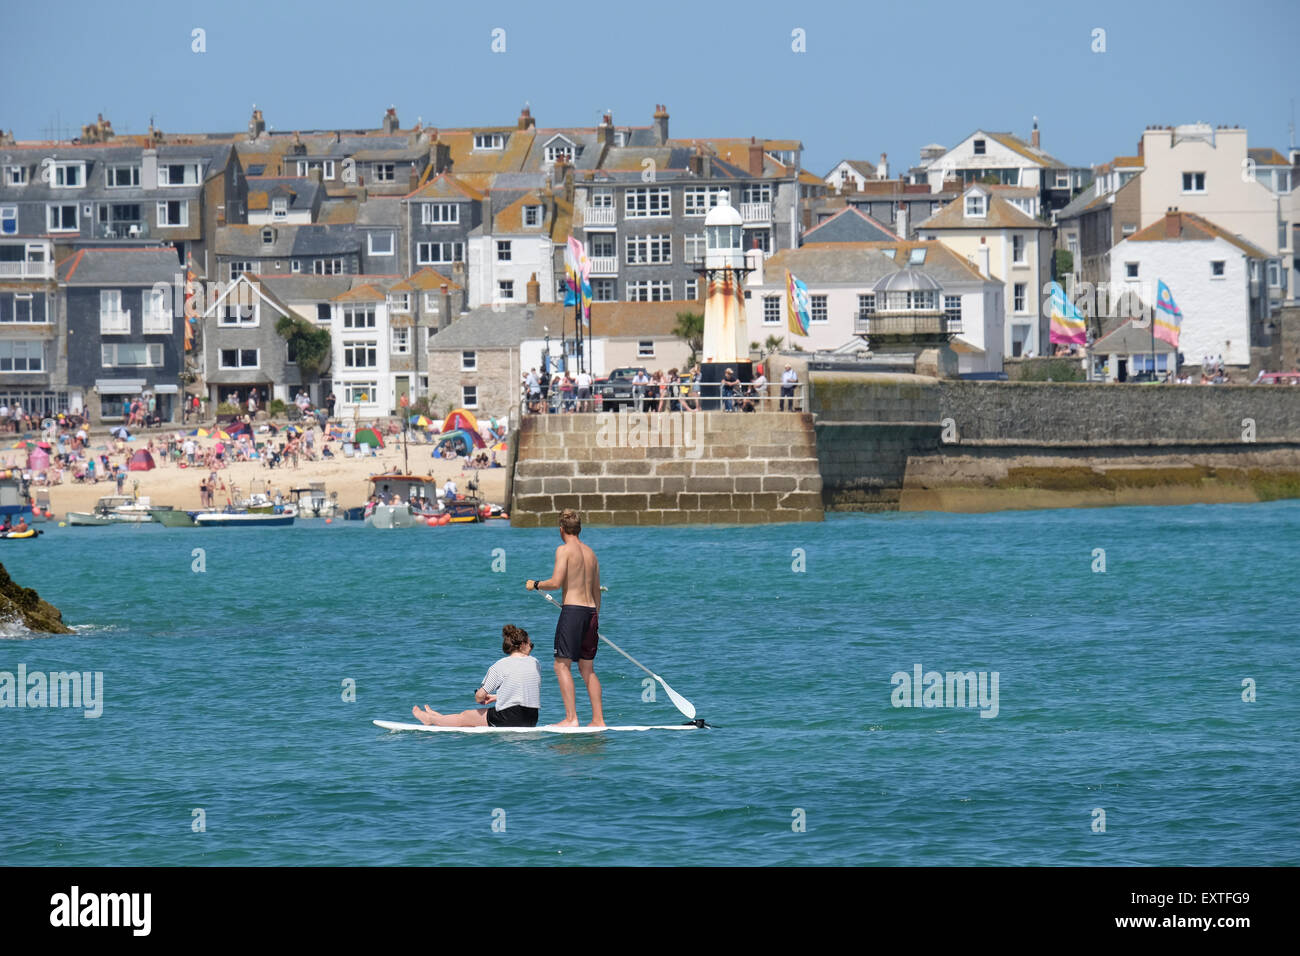 St. Ives, Cornwall, UK: Paar auf Paddleboard mit St Ives im Hintergrund. Stockfoto